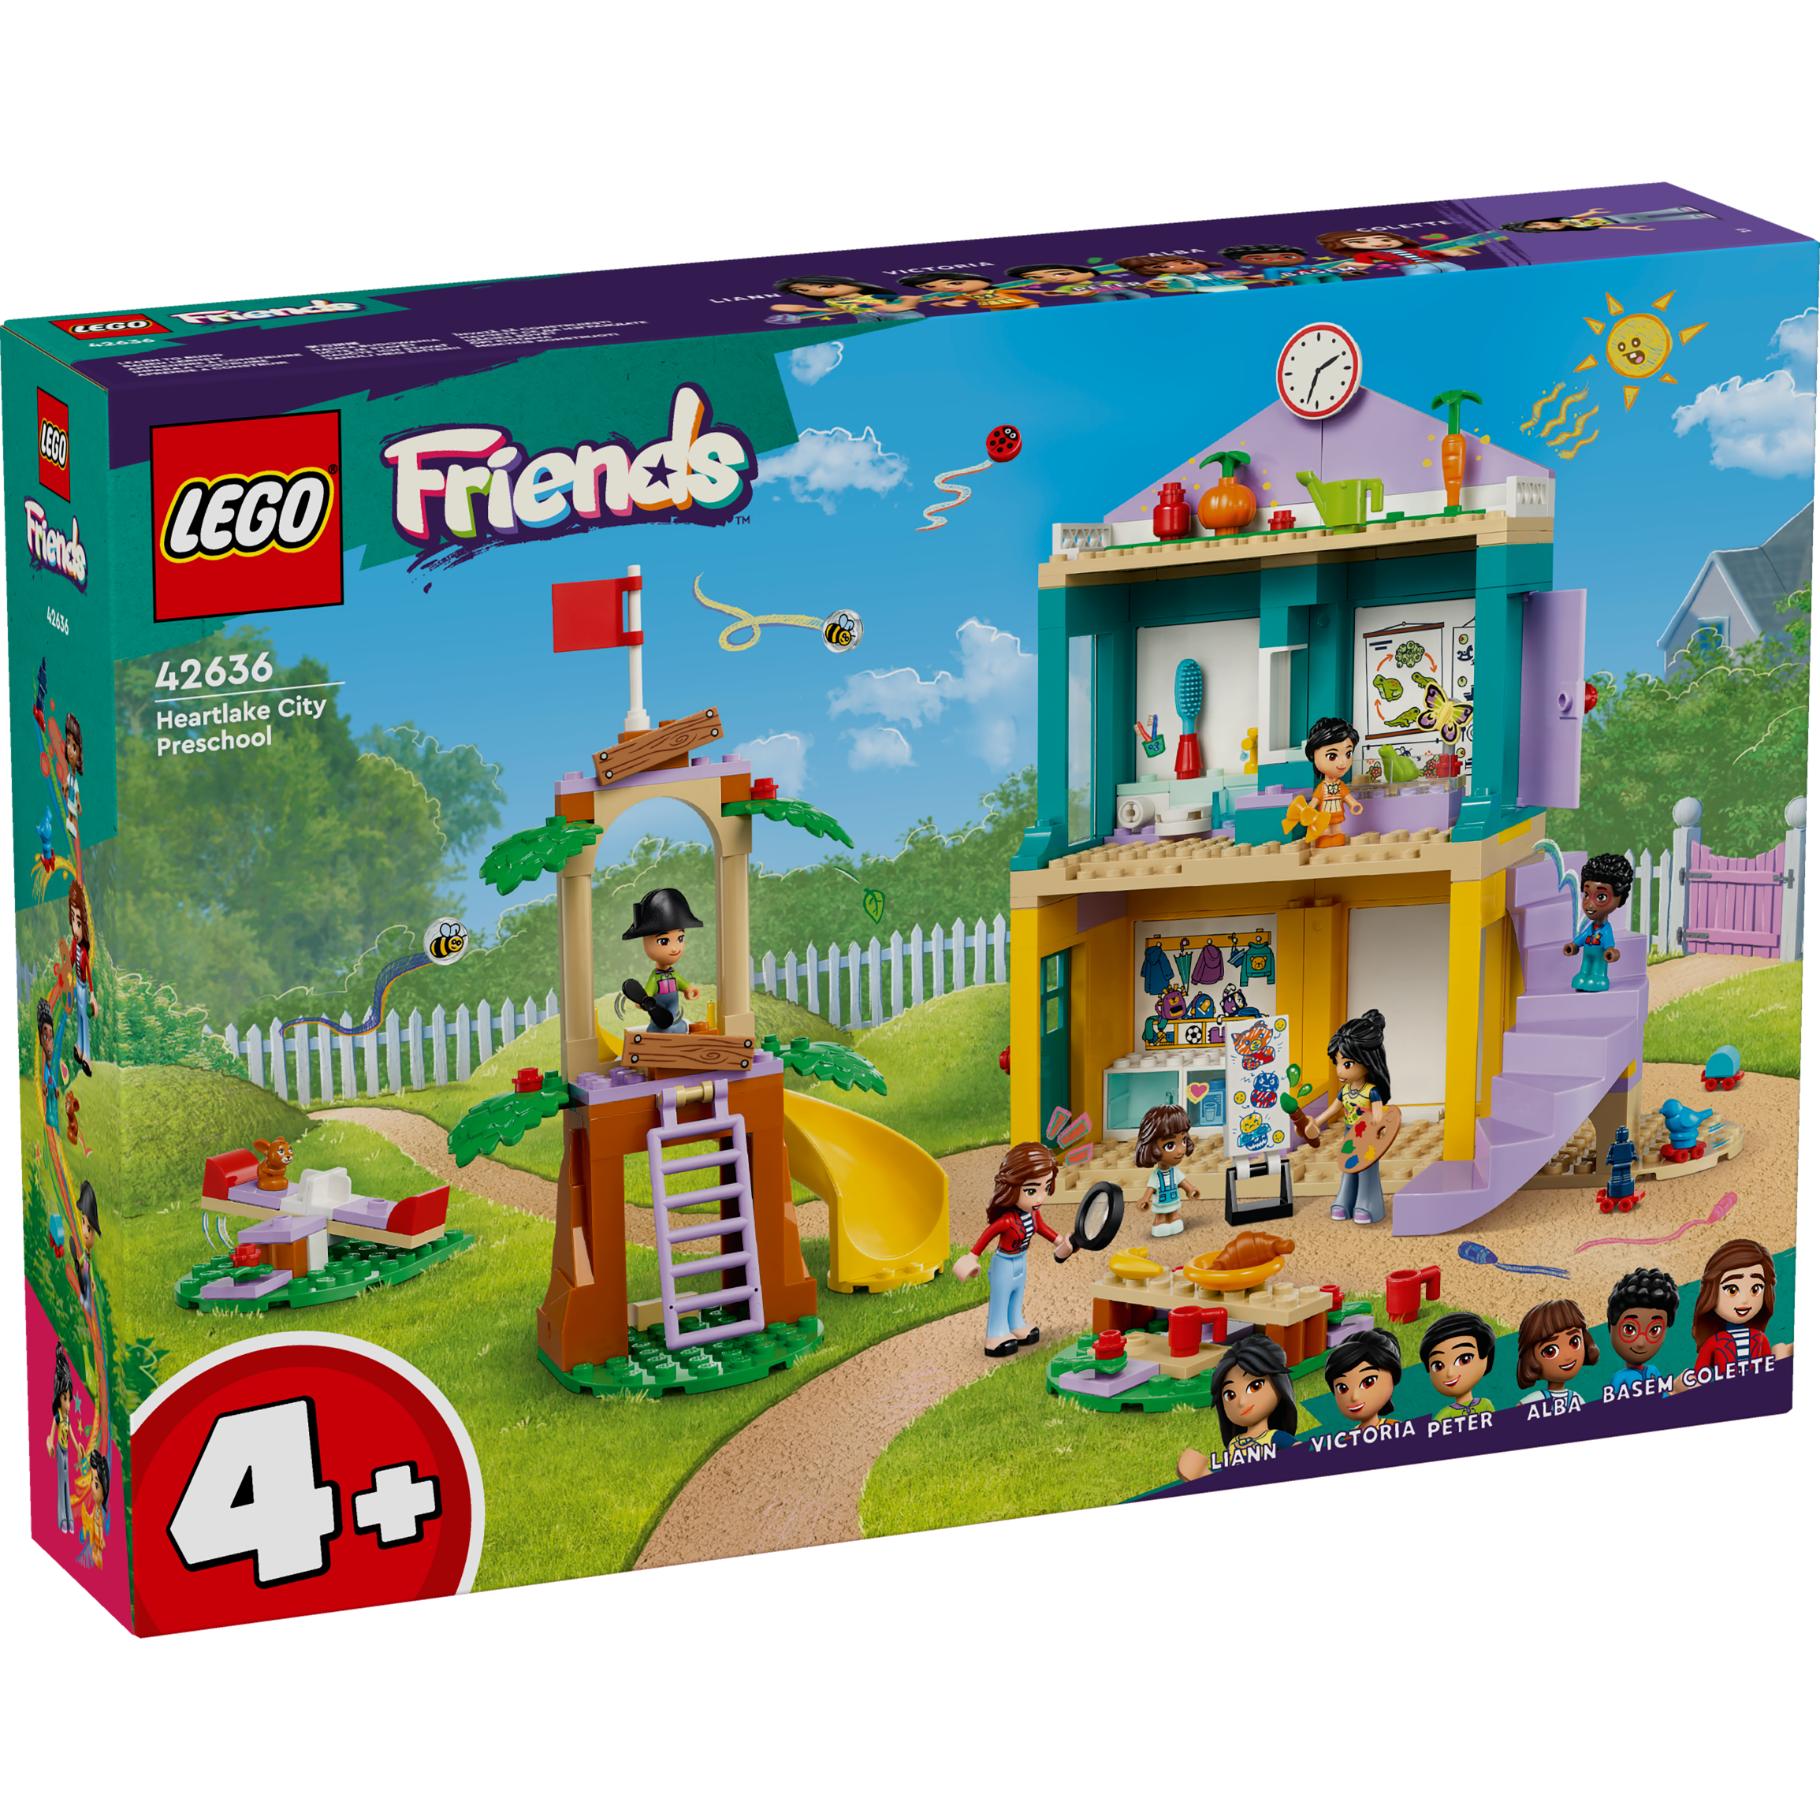 Lego 42636 Friends Heartlake City Kindergarten, Konstruktionsspielzeug